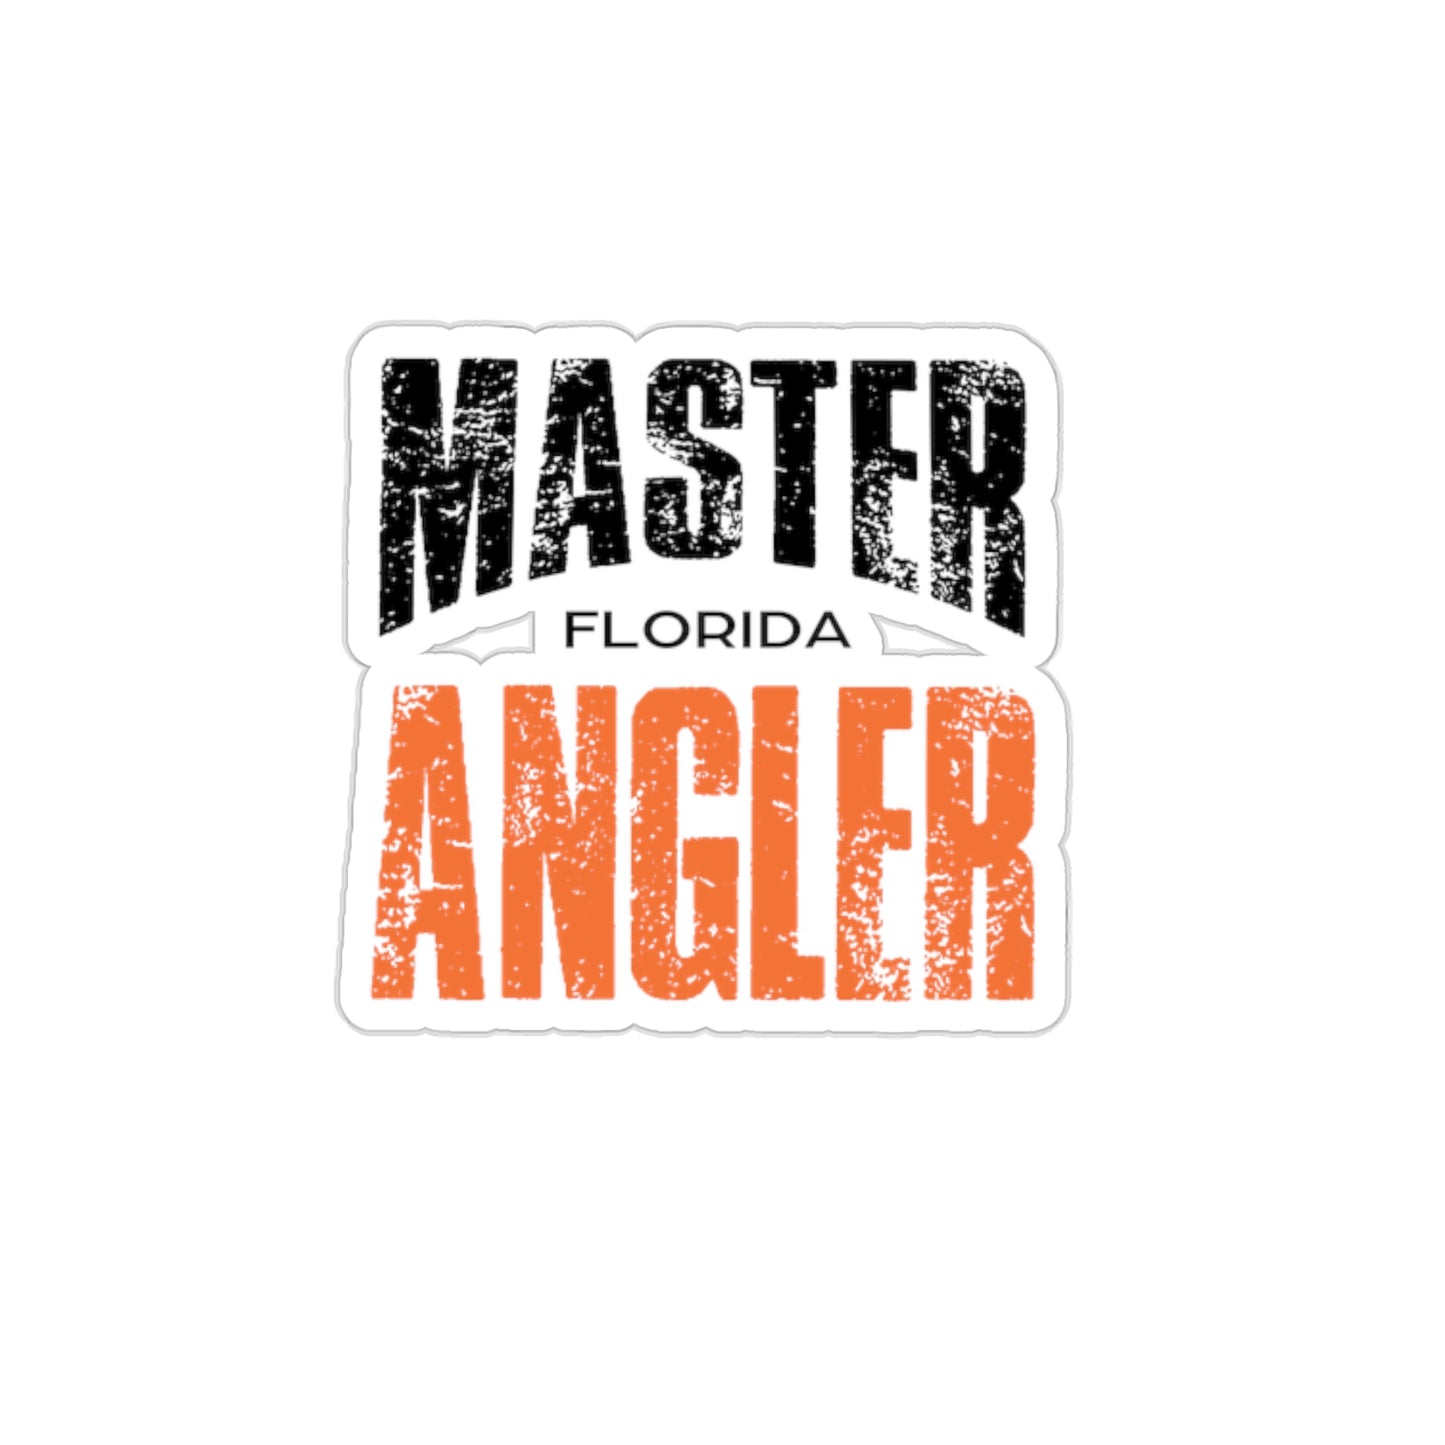 Florida Master Angler Sticker - ORANGE